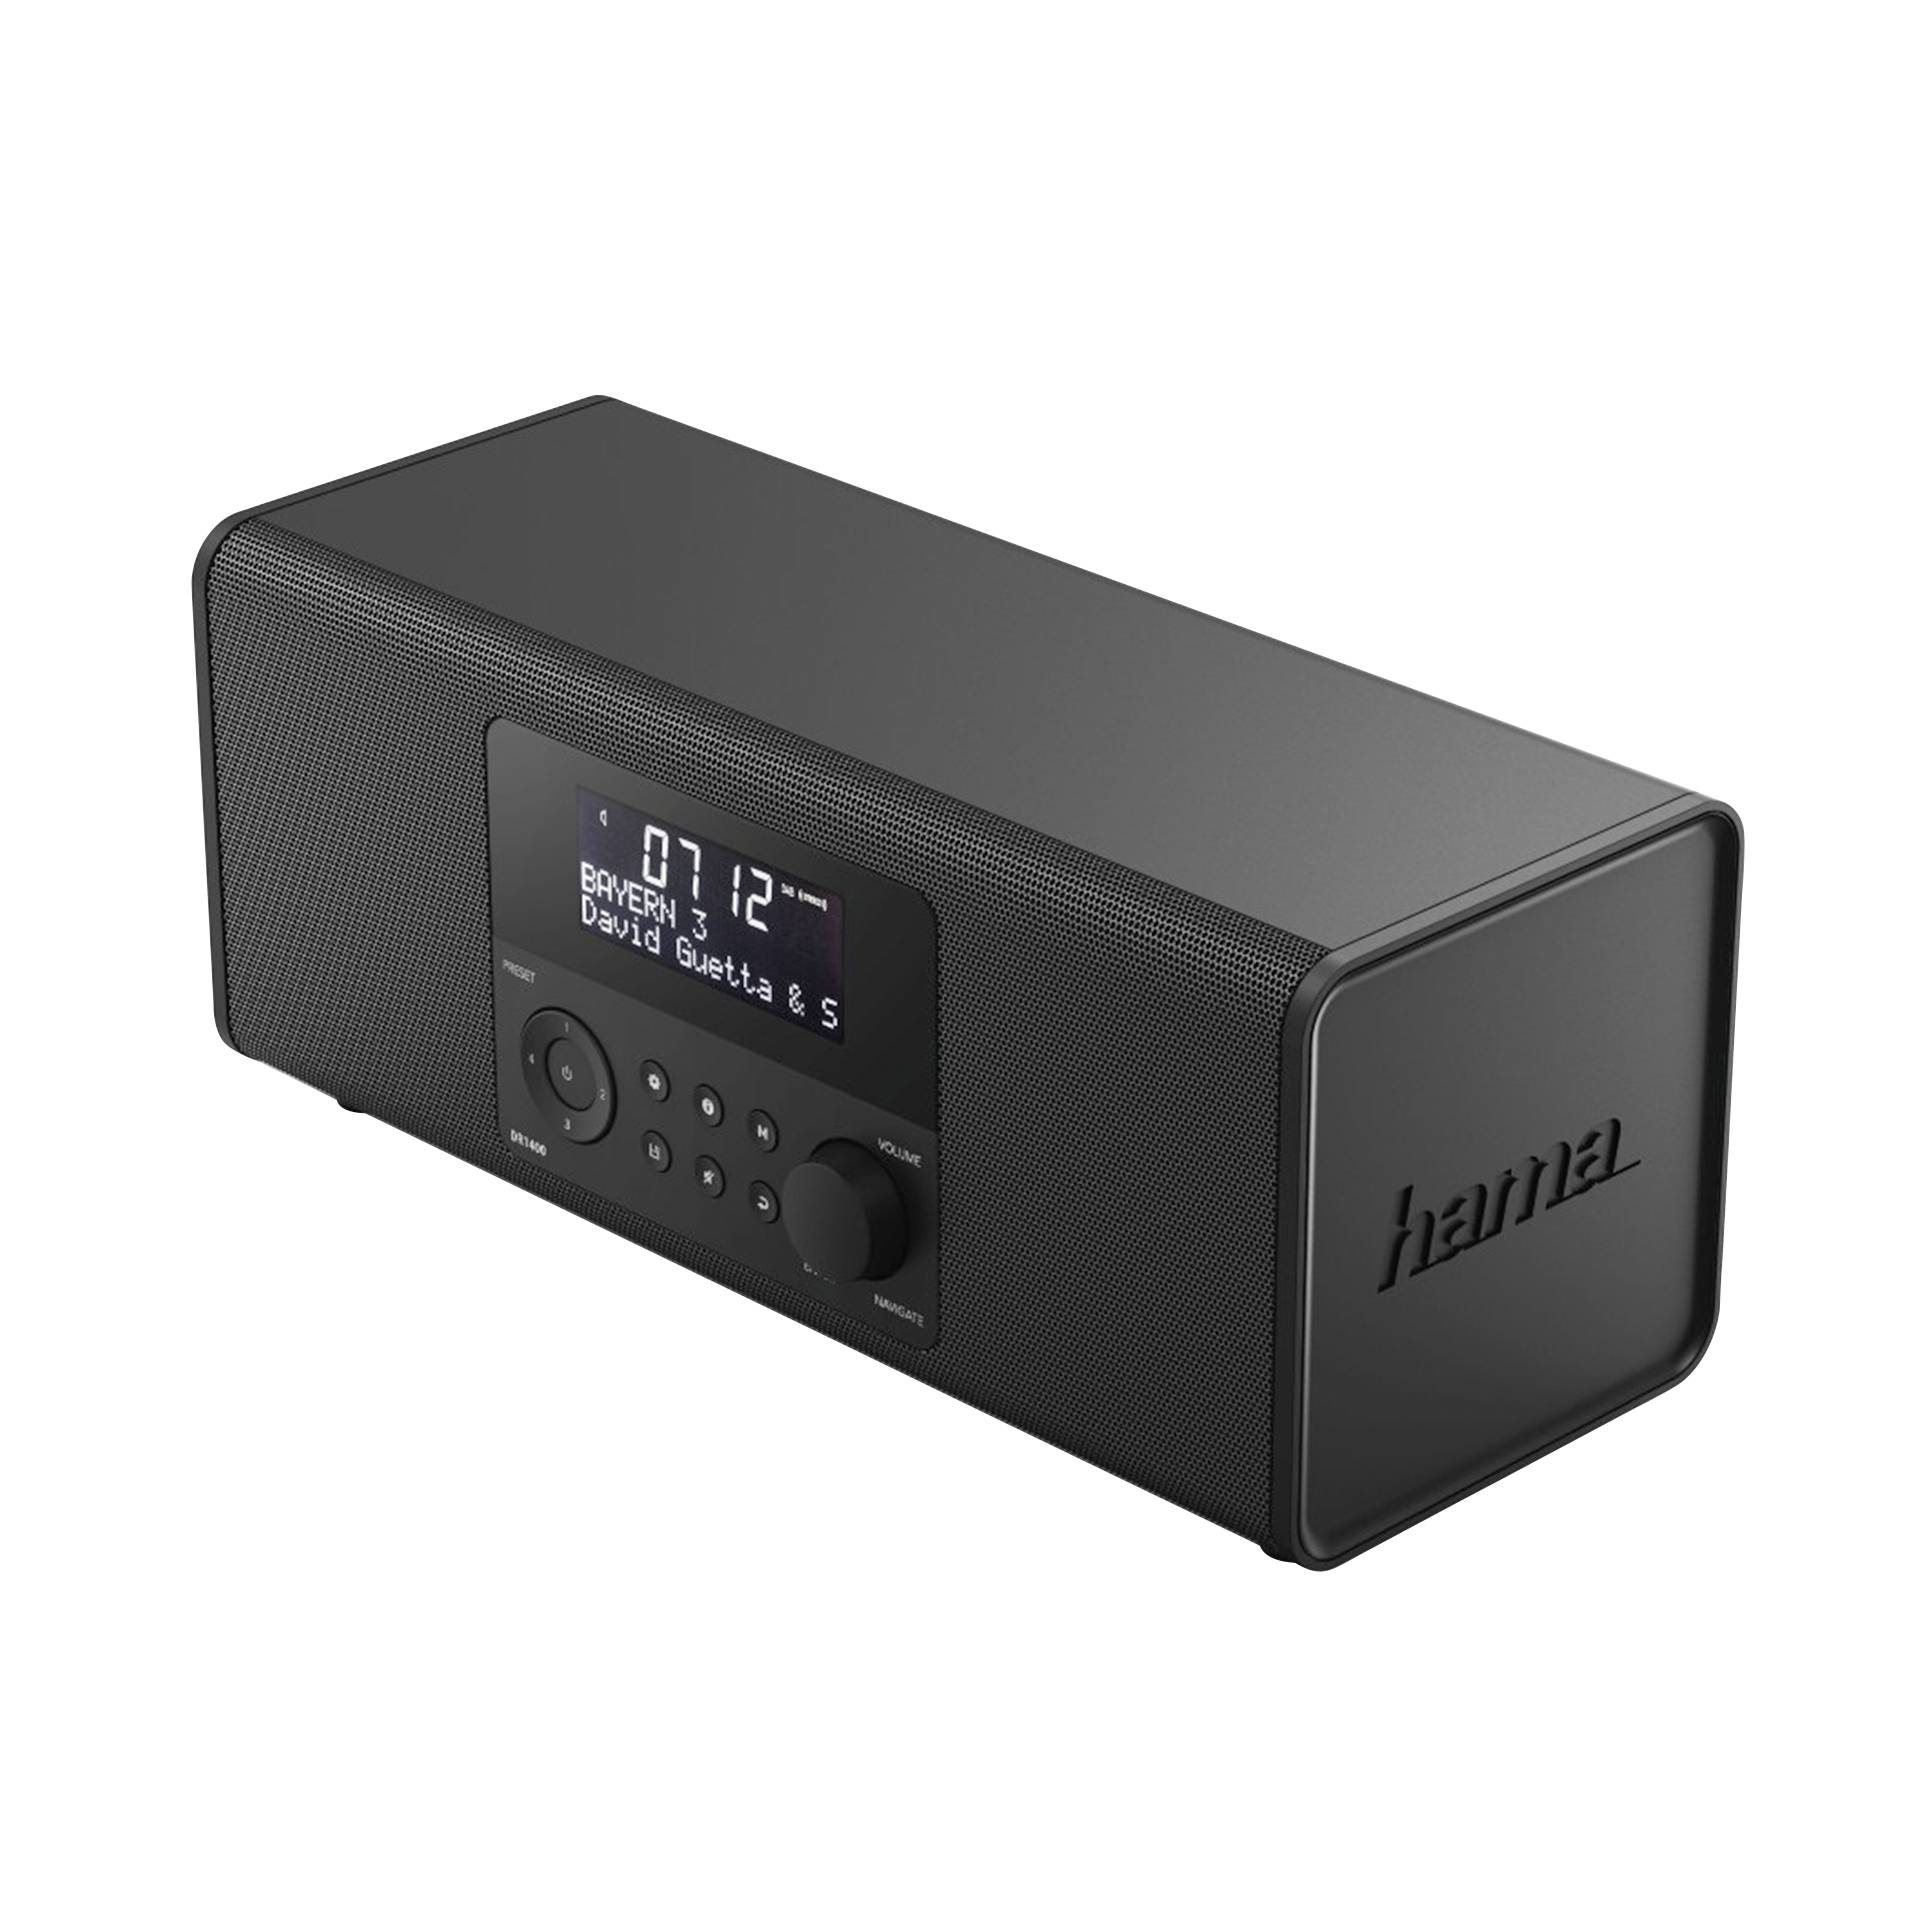 Hama -Digitalradio DR1400 FM / DAB / DAB+ -Hama Hardware/Electronic